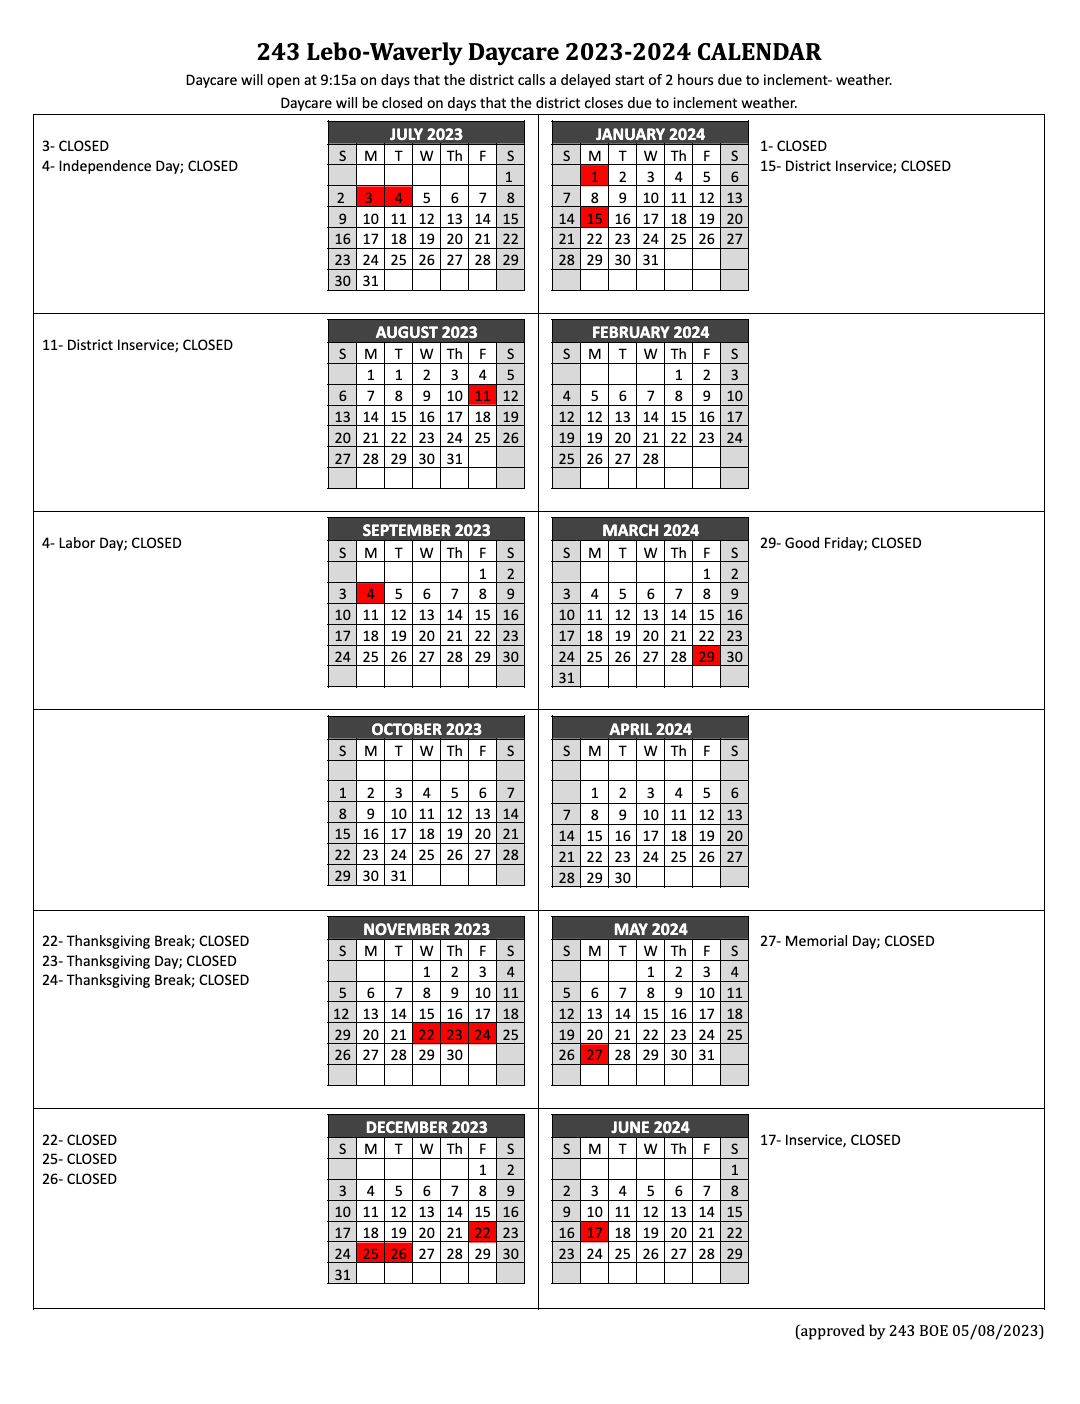 USD243 Daycare 2022-23 Calendar